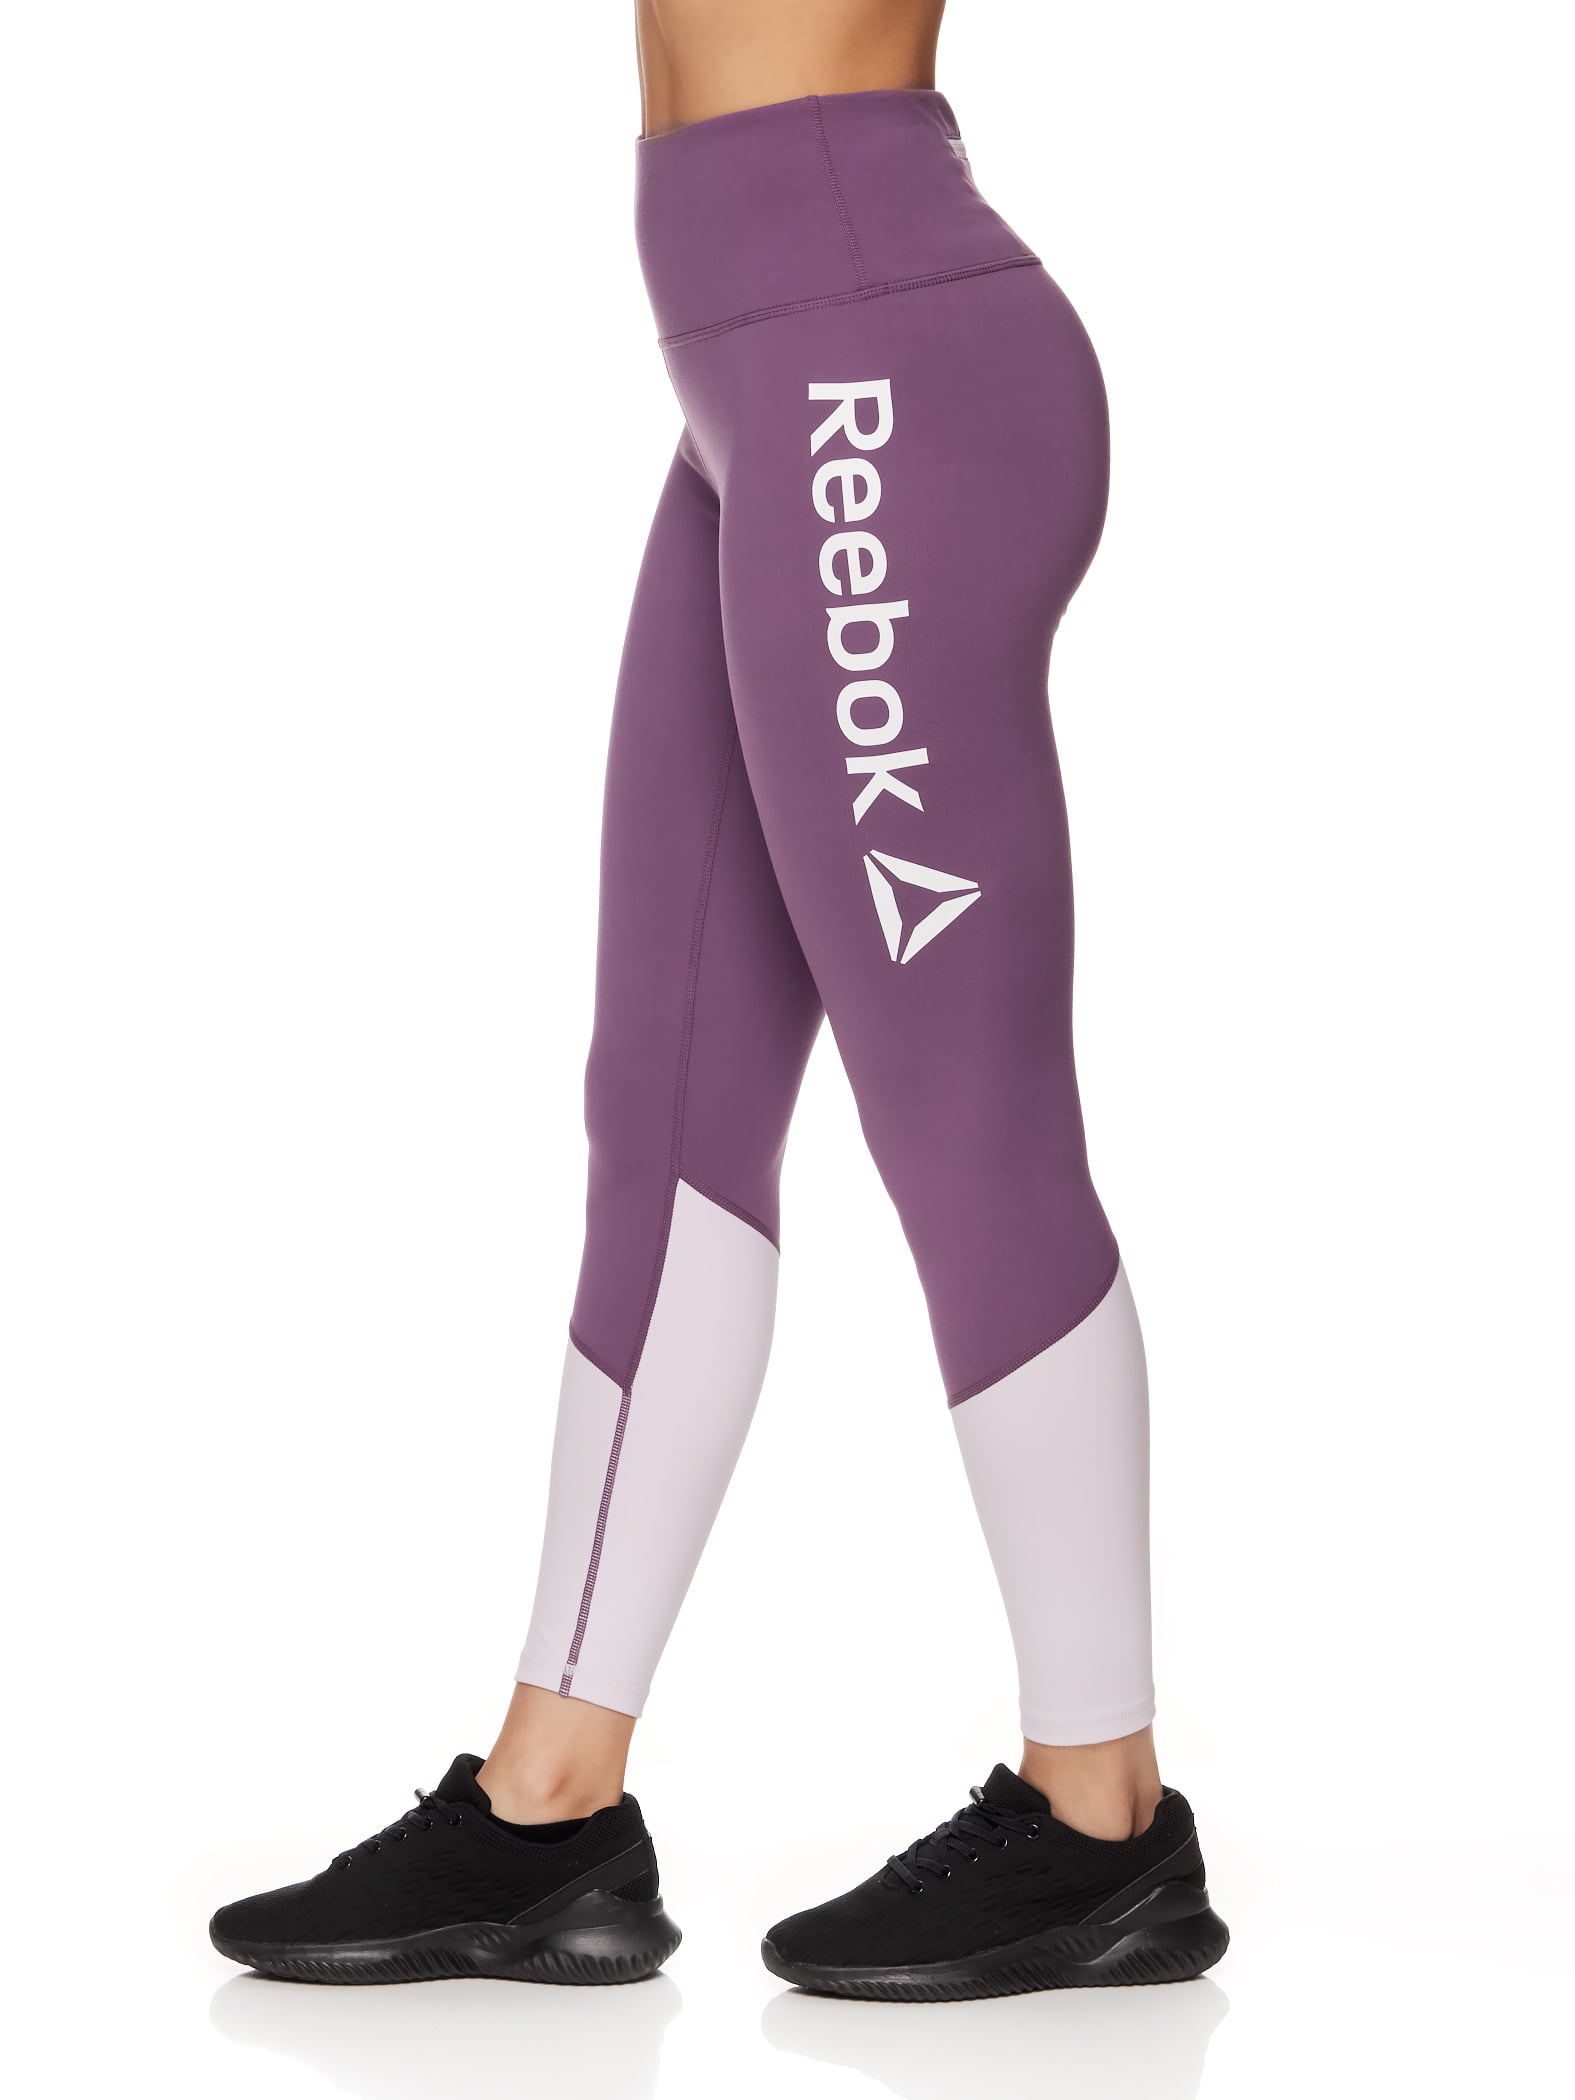 Reebok Women's Focus Highrise 7/8 Legging with 25" Inseam and Back Zipper Pocket -